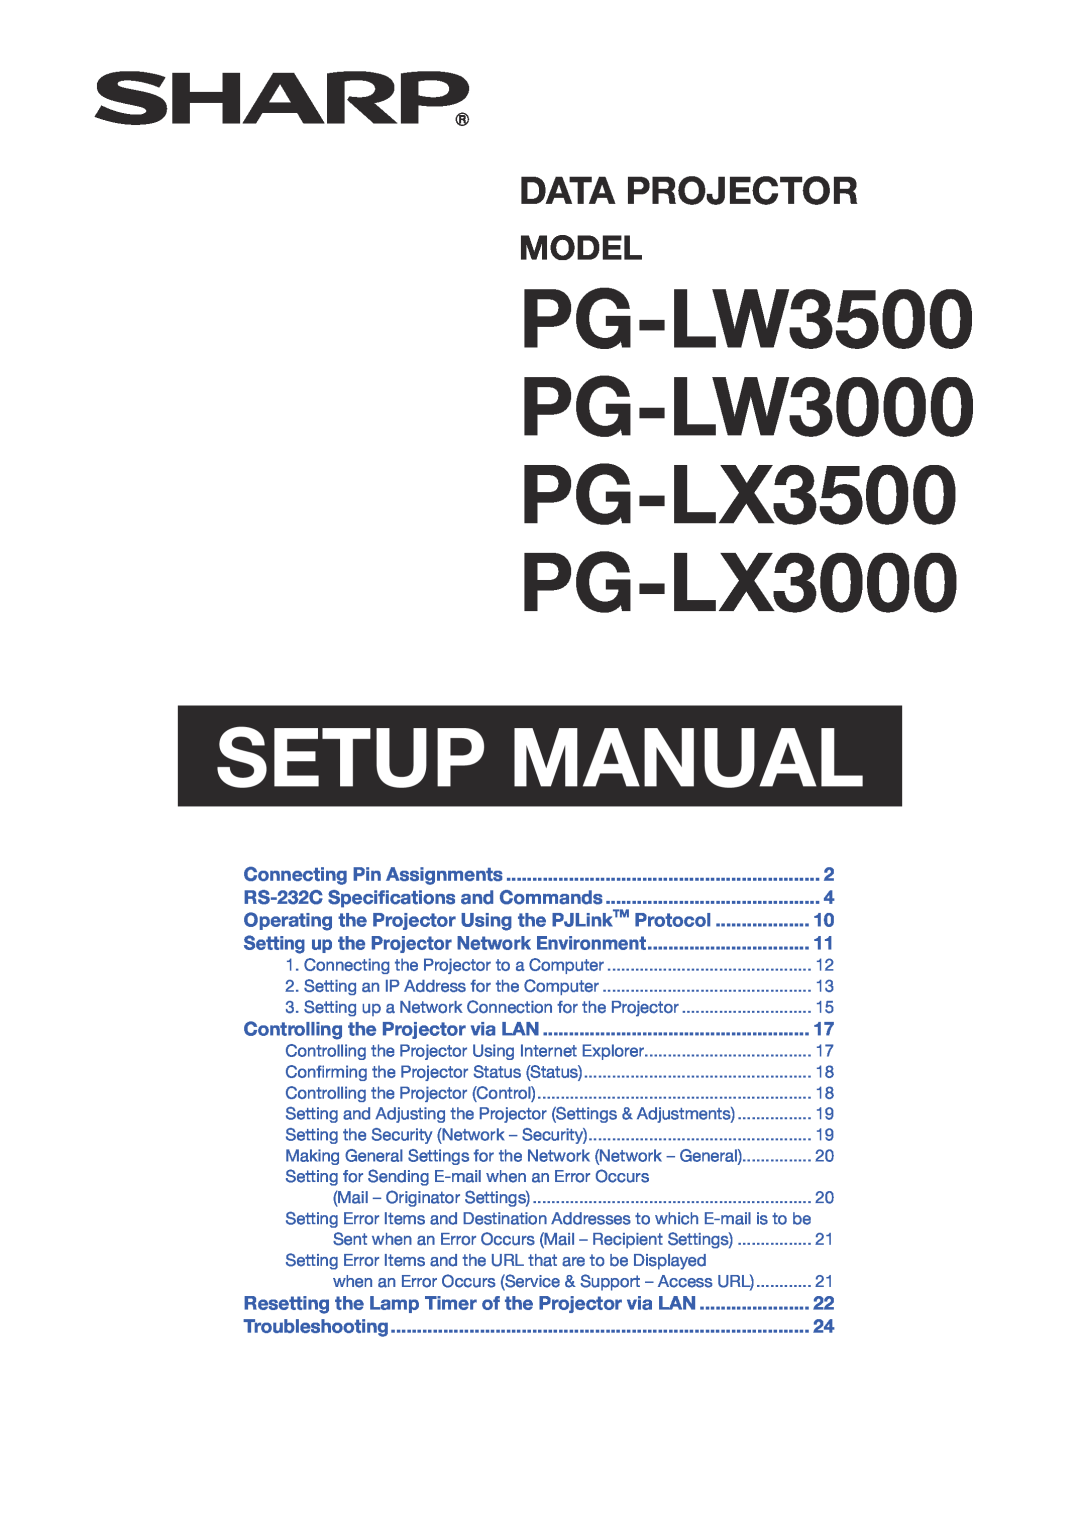 Sharp PGLX3500, PGLX3000 specifications PG-LW3500 PG-LW3000 PG-LX3500 PG-LX3000, Setup Manual, Data Projector, Model 